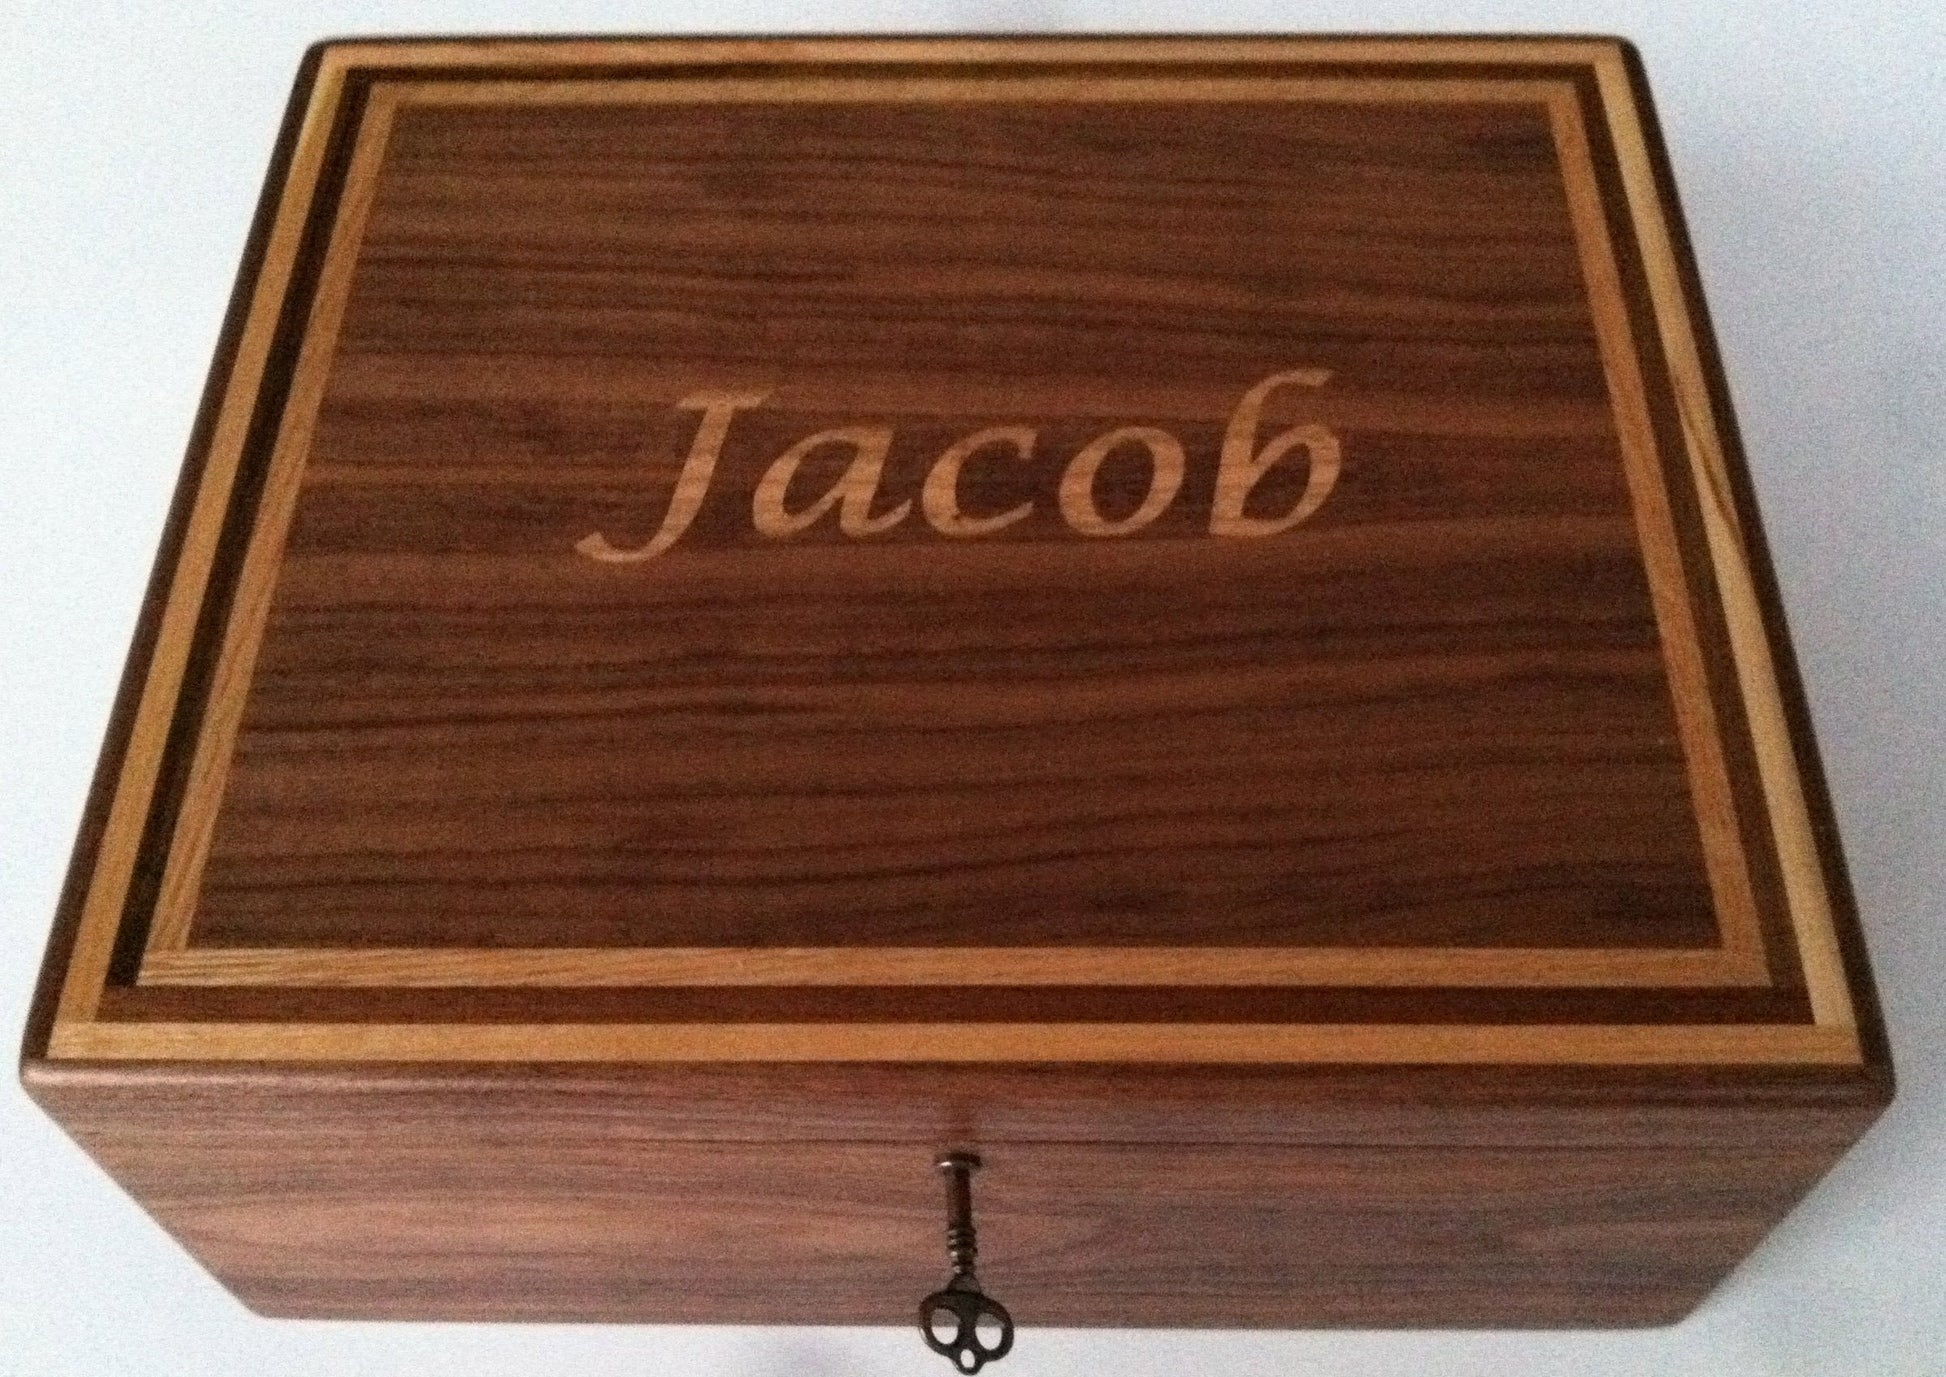 Custom wooden box - TreeToBox